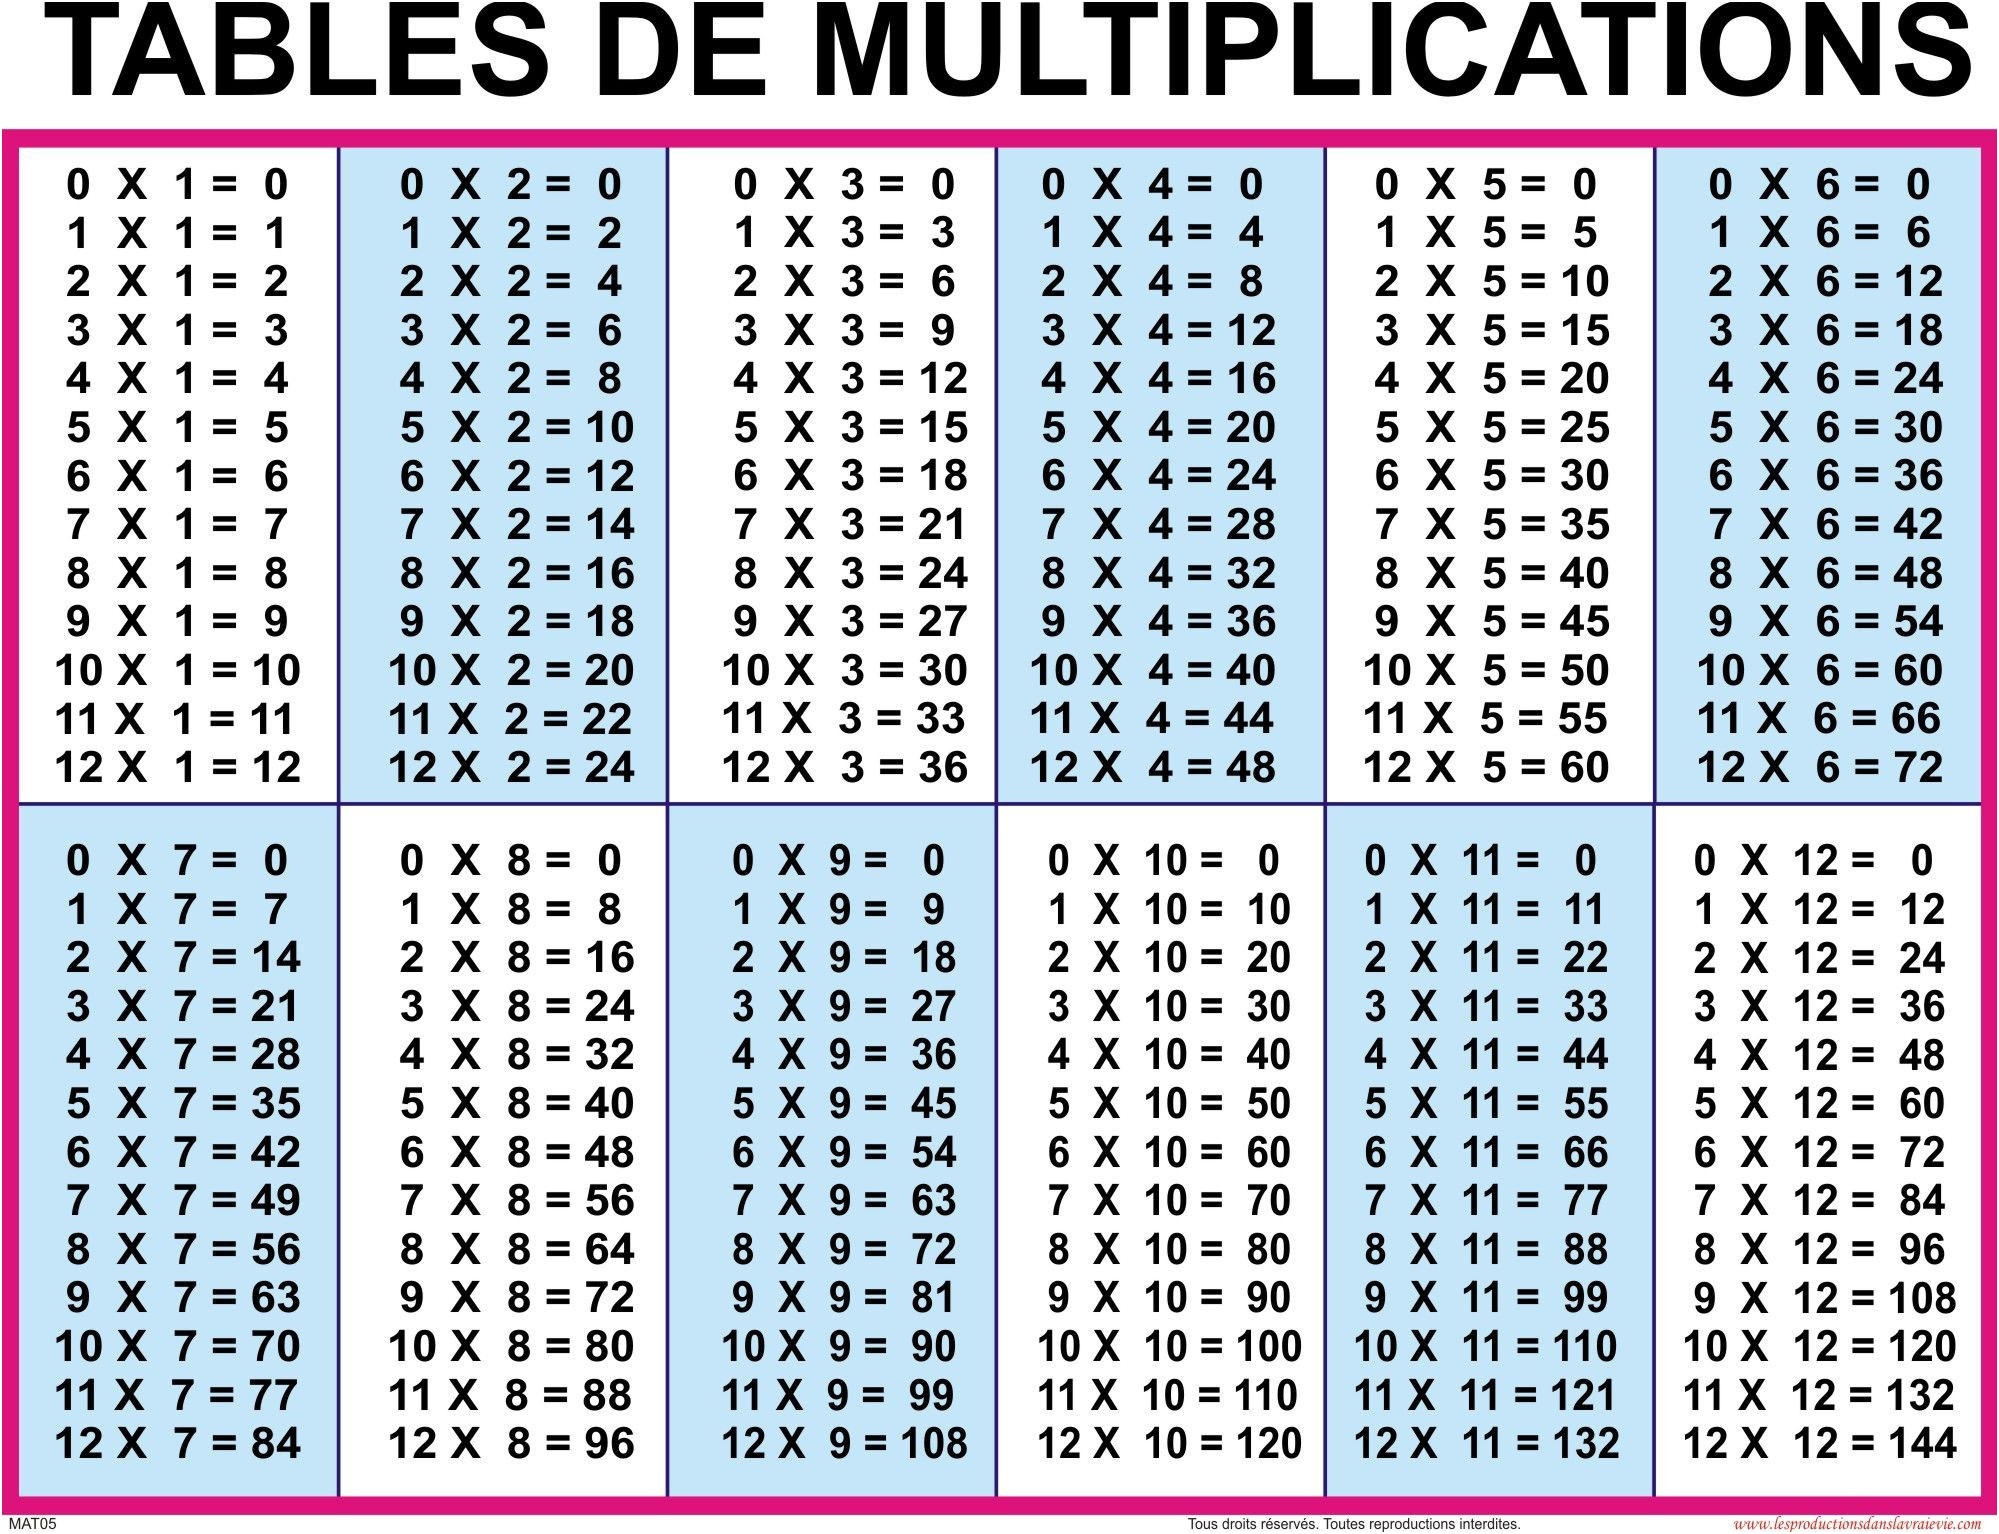 55 exercices tables de multiplication apprendre les tables beau fabuleux jeux de table de multiplication